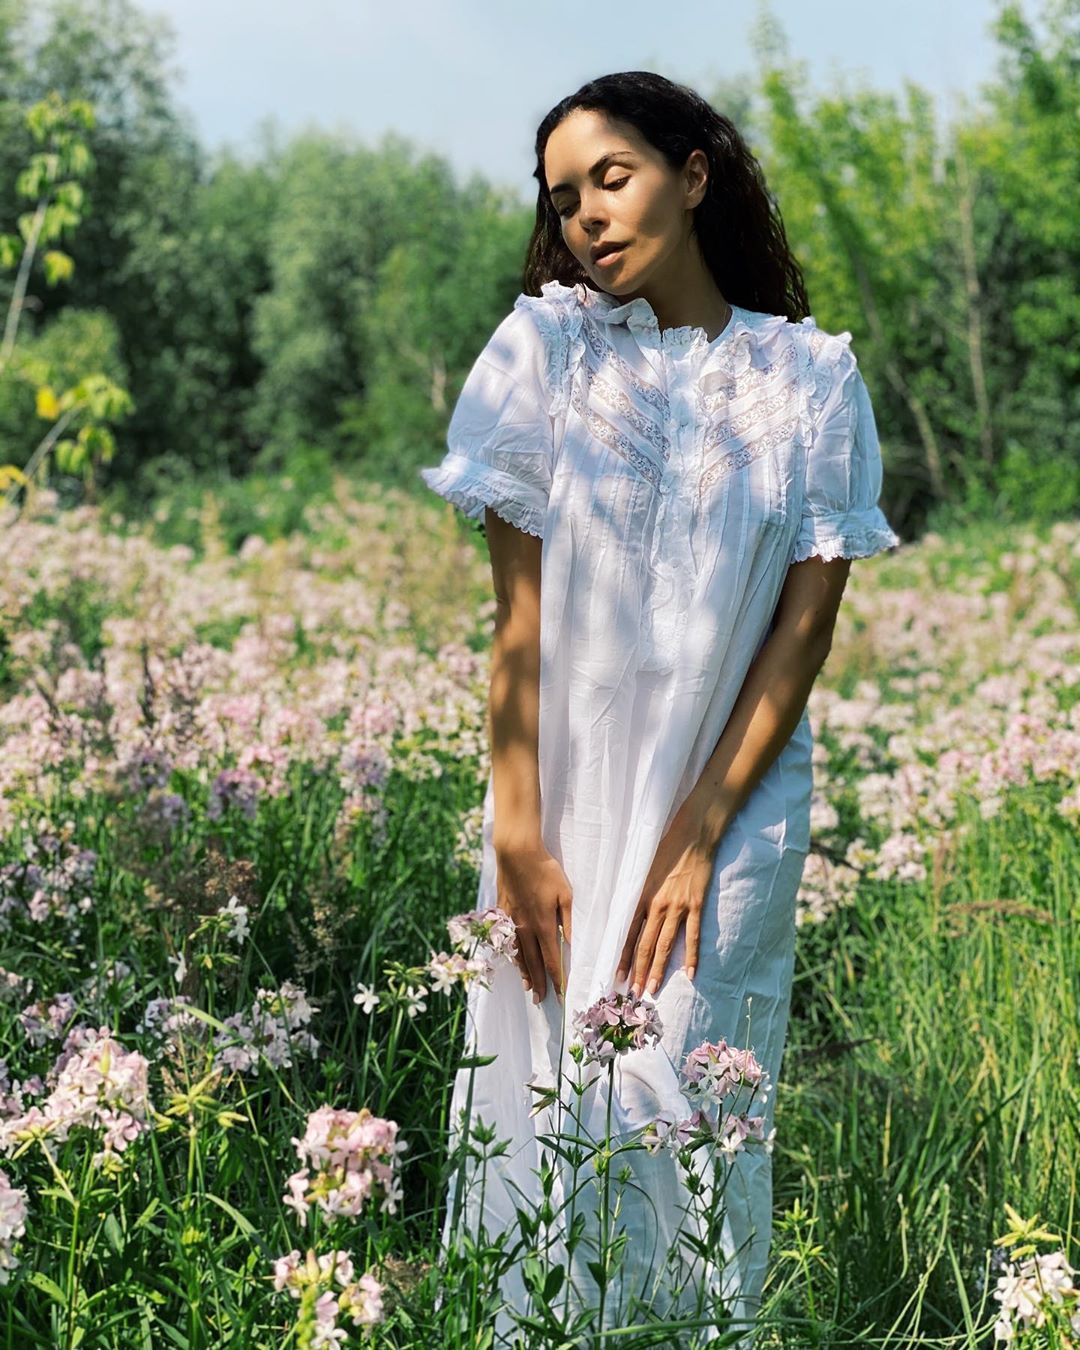 NK | Nastia Kamenskykh - The magic of nature 🌿🌷🌼
⠀
#summerflowers #forest #inbloom